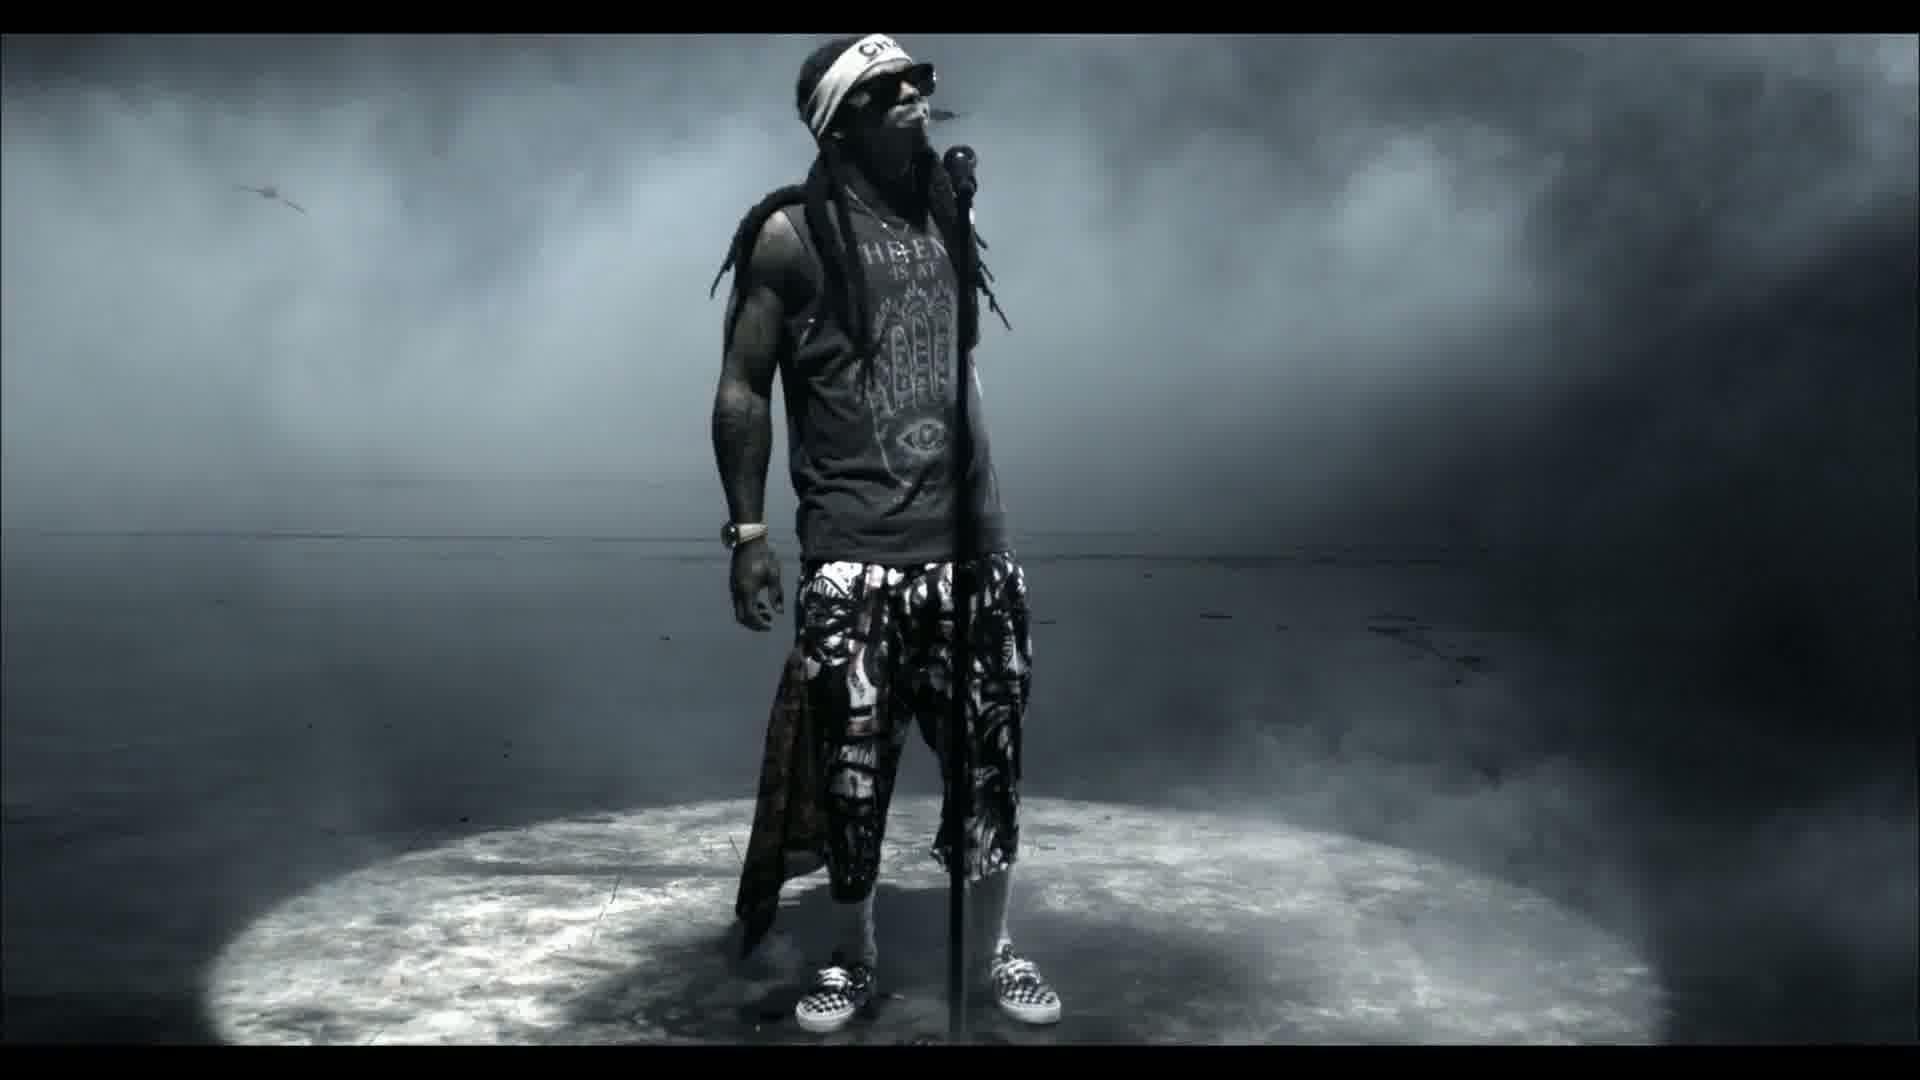 Lil Wayne Image Wallpaper. Lil wayne, Best rapper, Celebrities